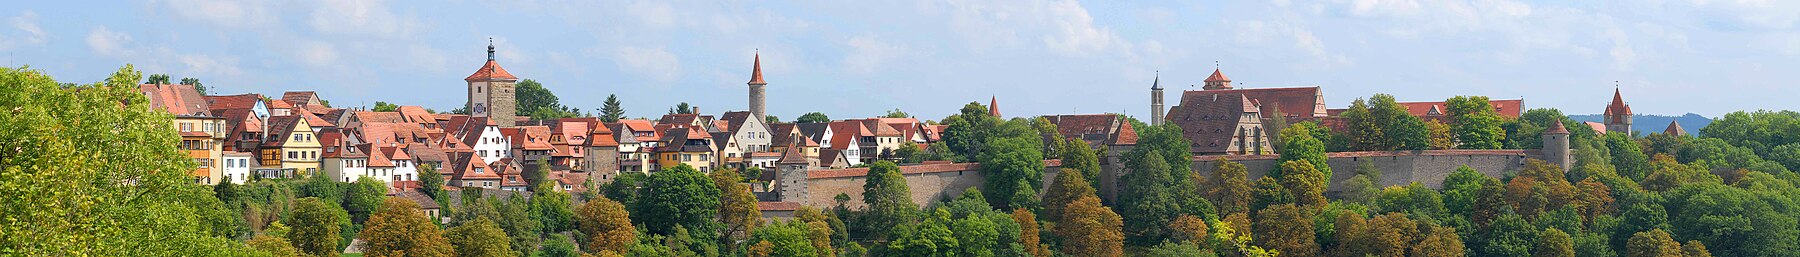 Rothenburg banner 01.jpg